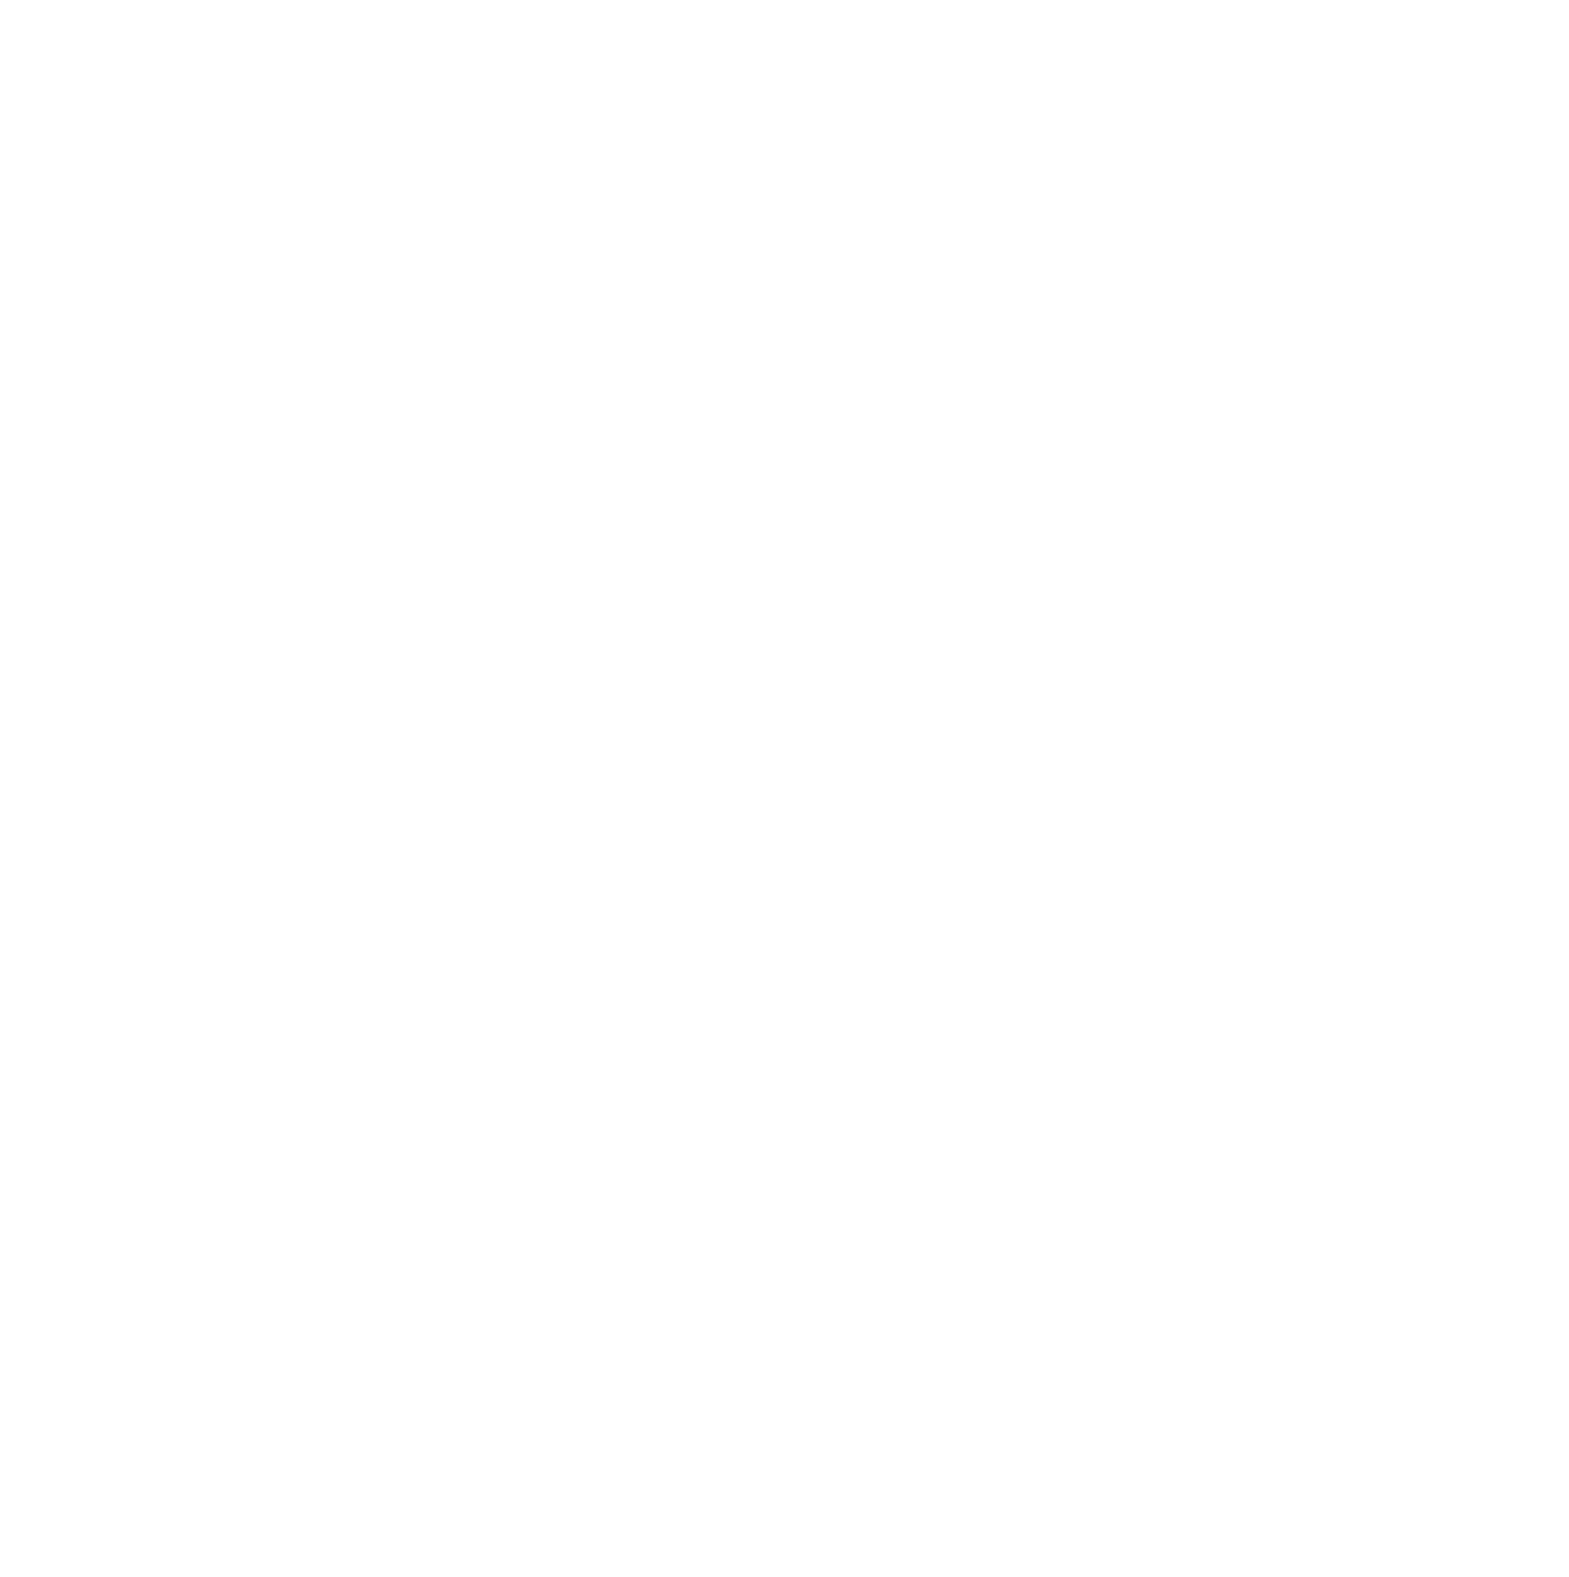 Just Eat Takeaway logo pour fonds sombres (PNG transparent)